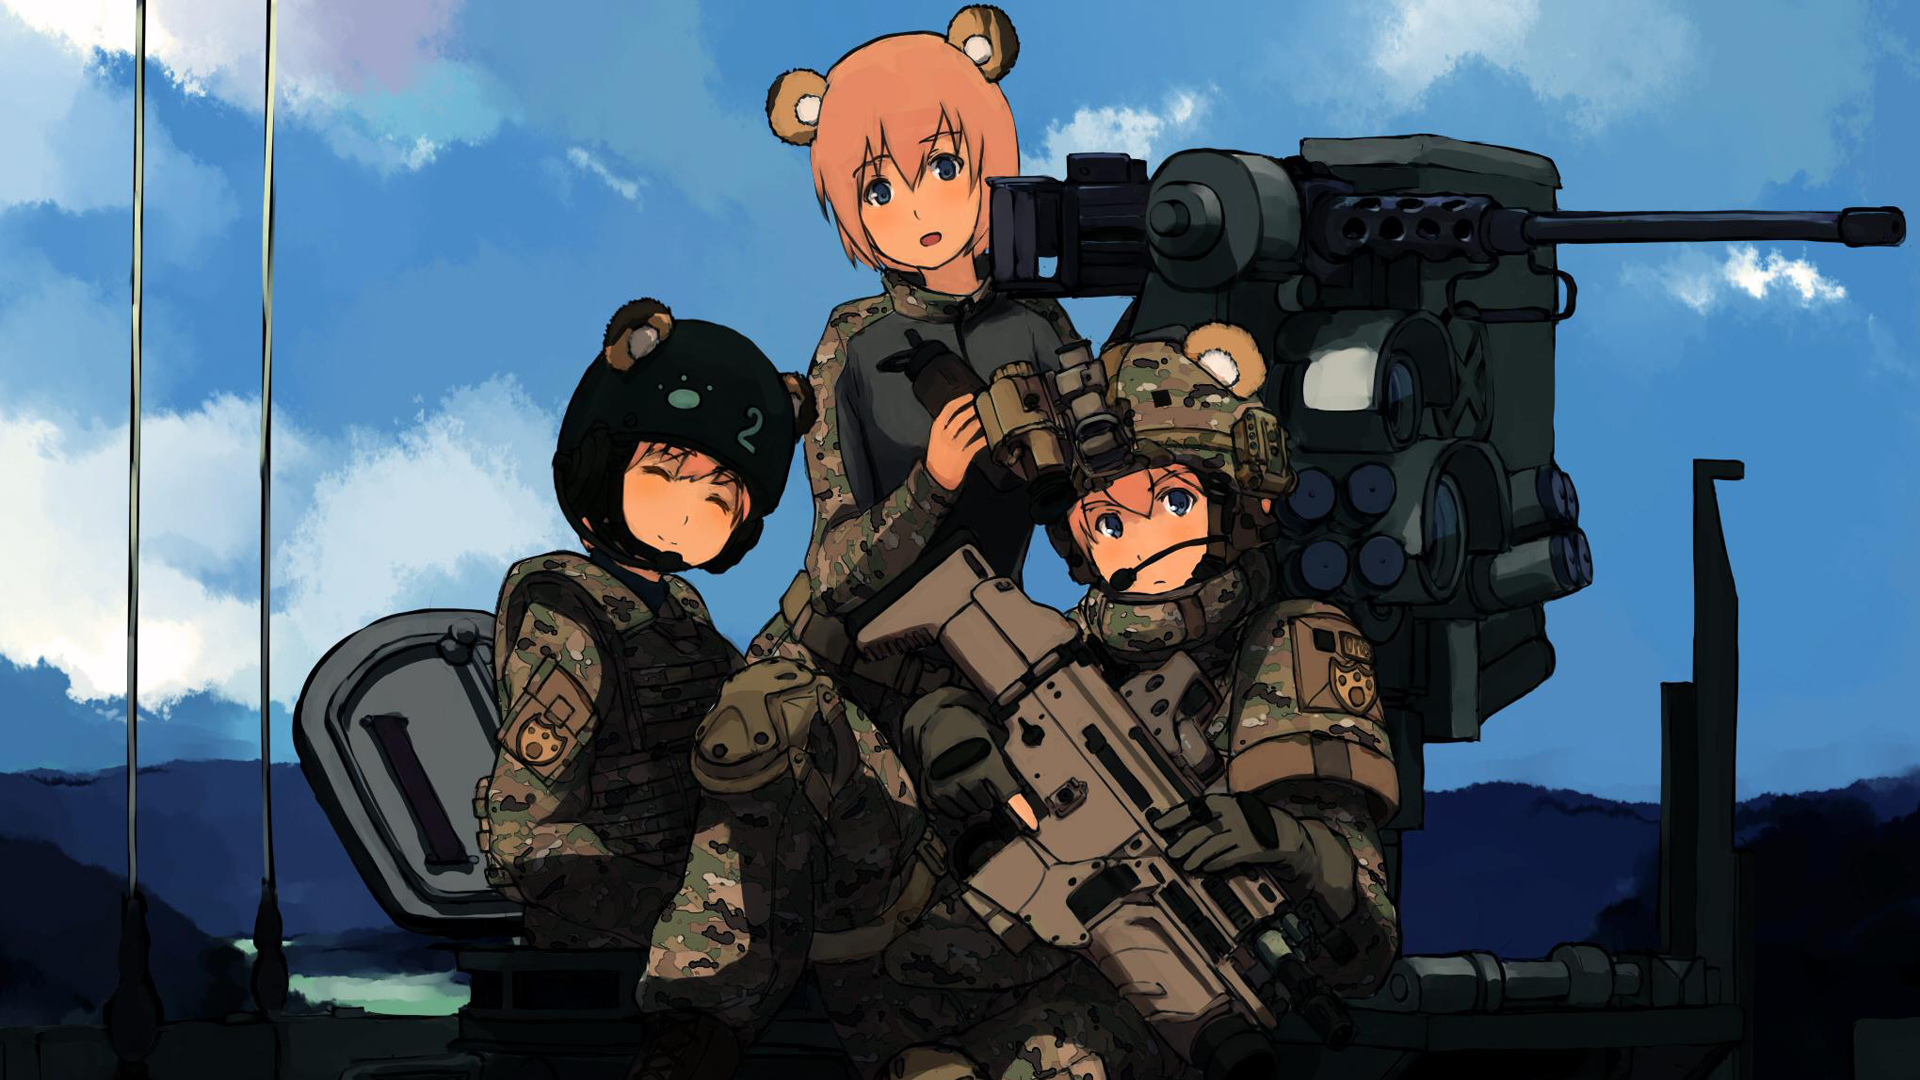 Anime Soldier Desktop Wallpaper